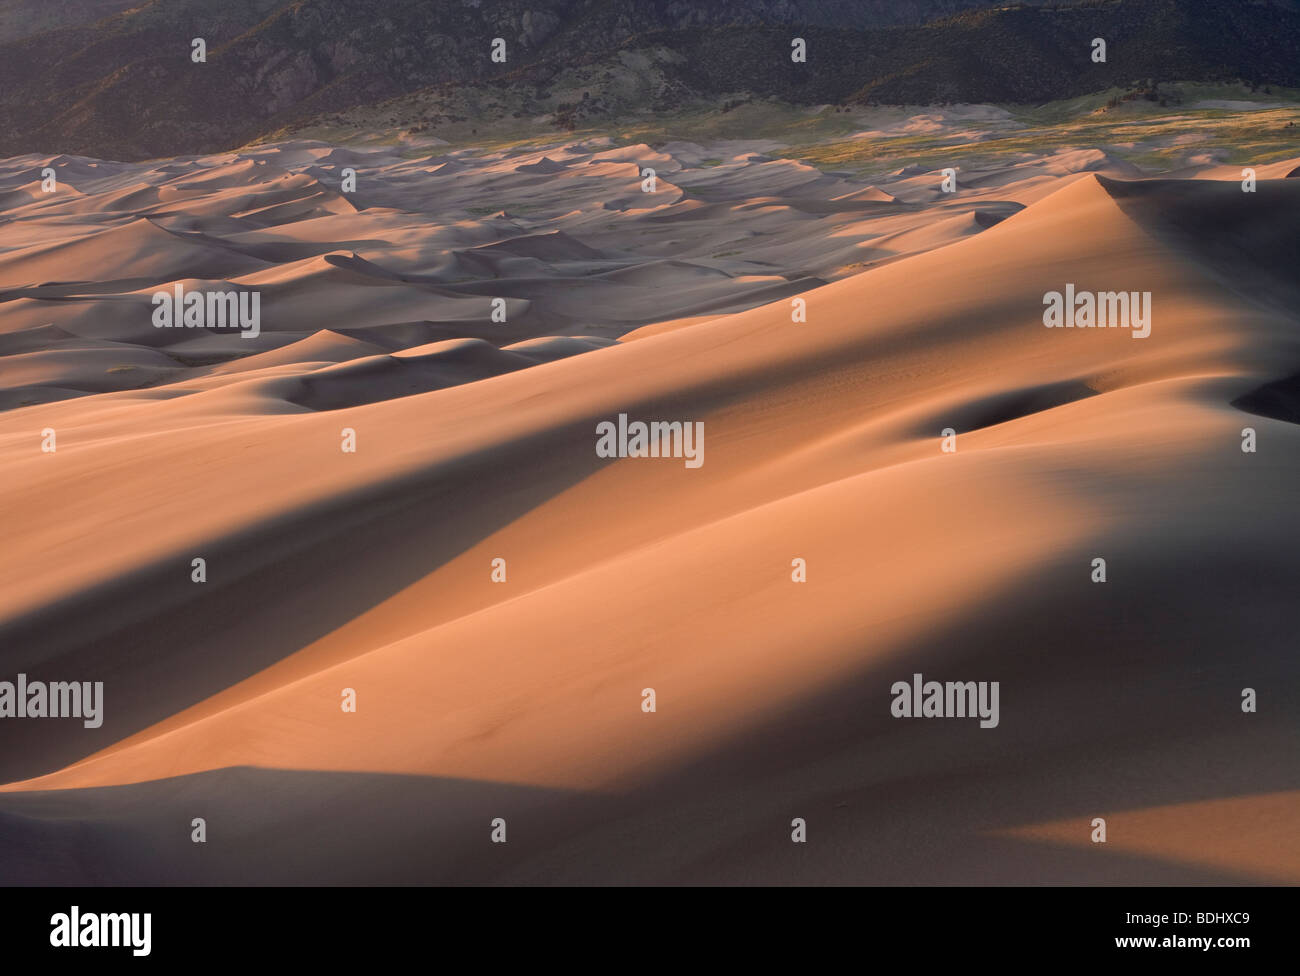 sand dunes at sunset, Great Sand Dunes National Park, Colorado Stock Photo